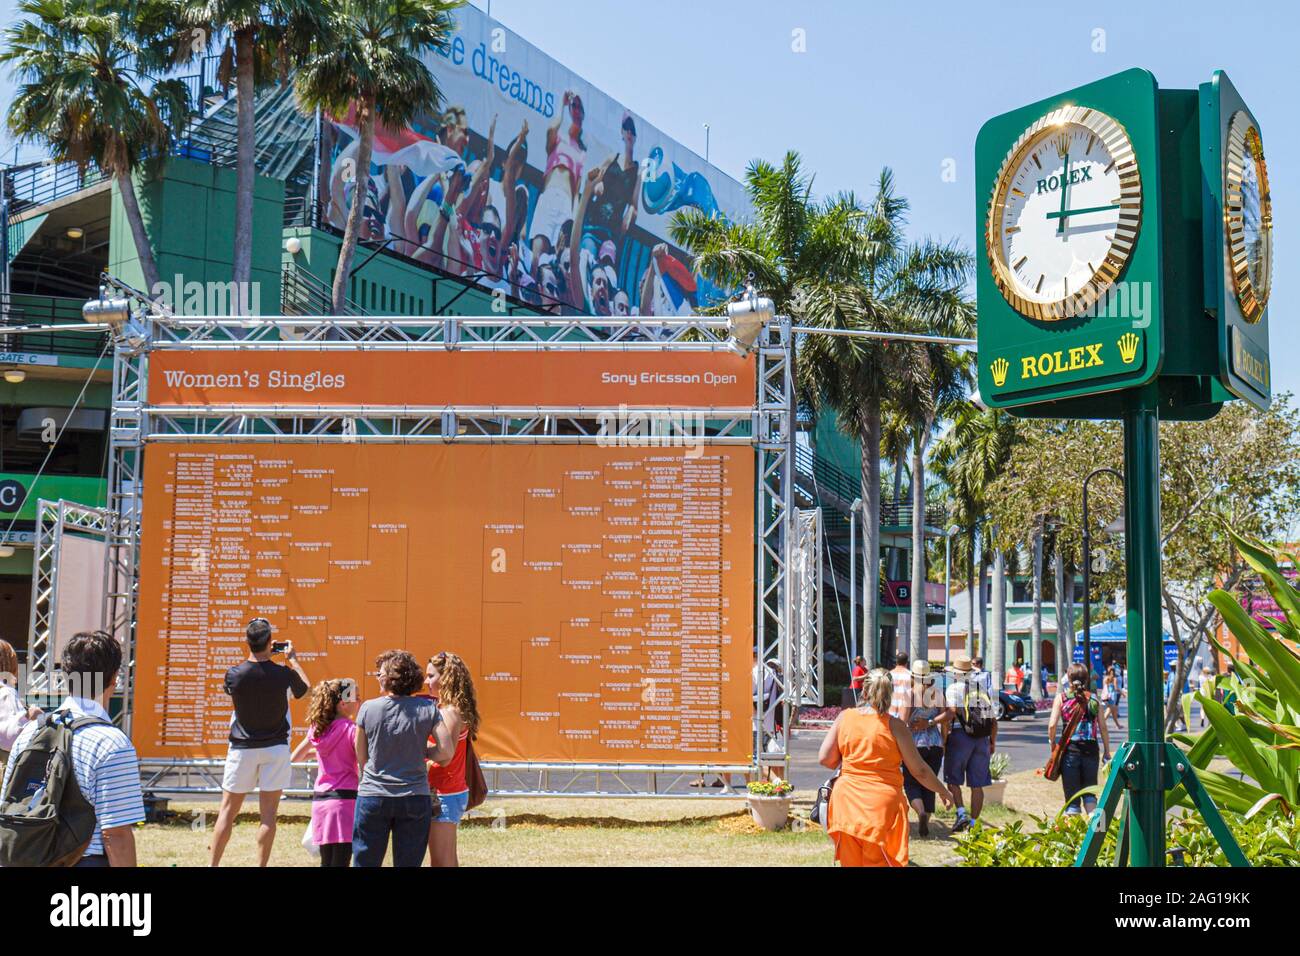 Miami Florida,Key Biscayne,Sony Ericsson Openal tennis tournament,sporting corporate sponsor,Rolex,scoreboard,FL100405013 Stock Photo